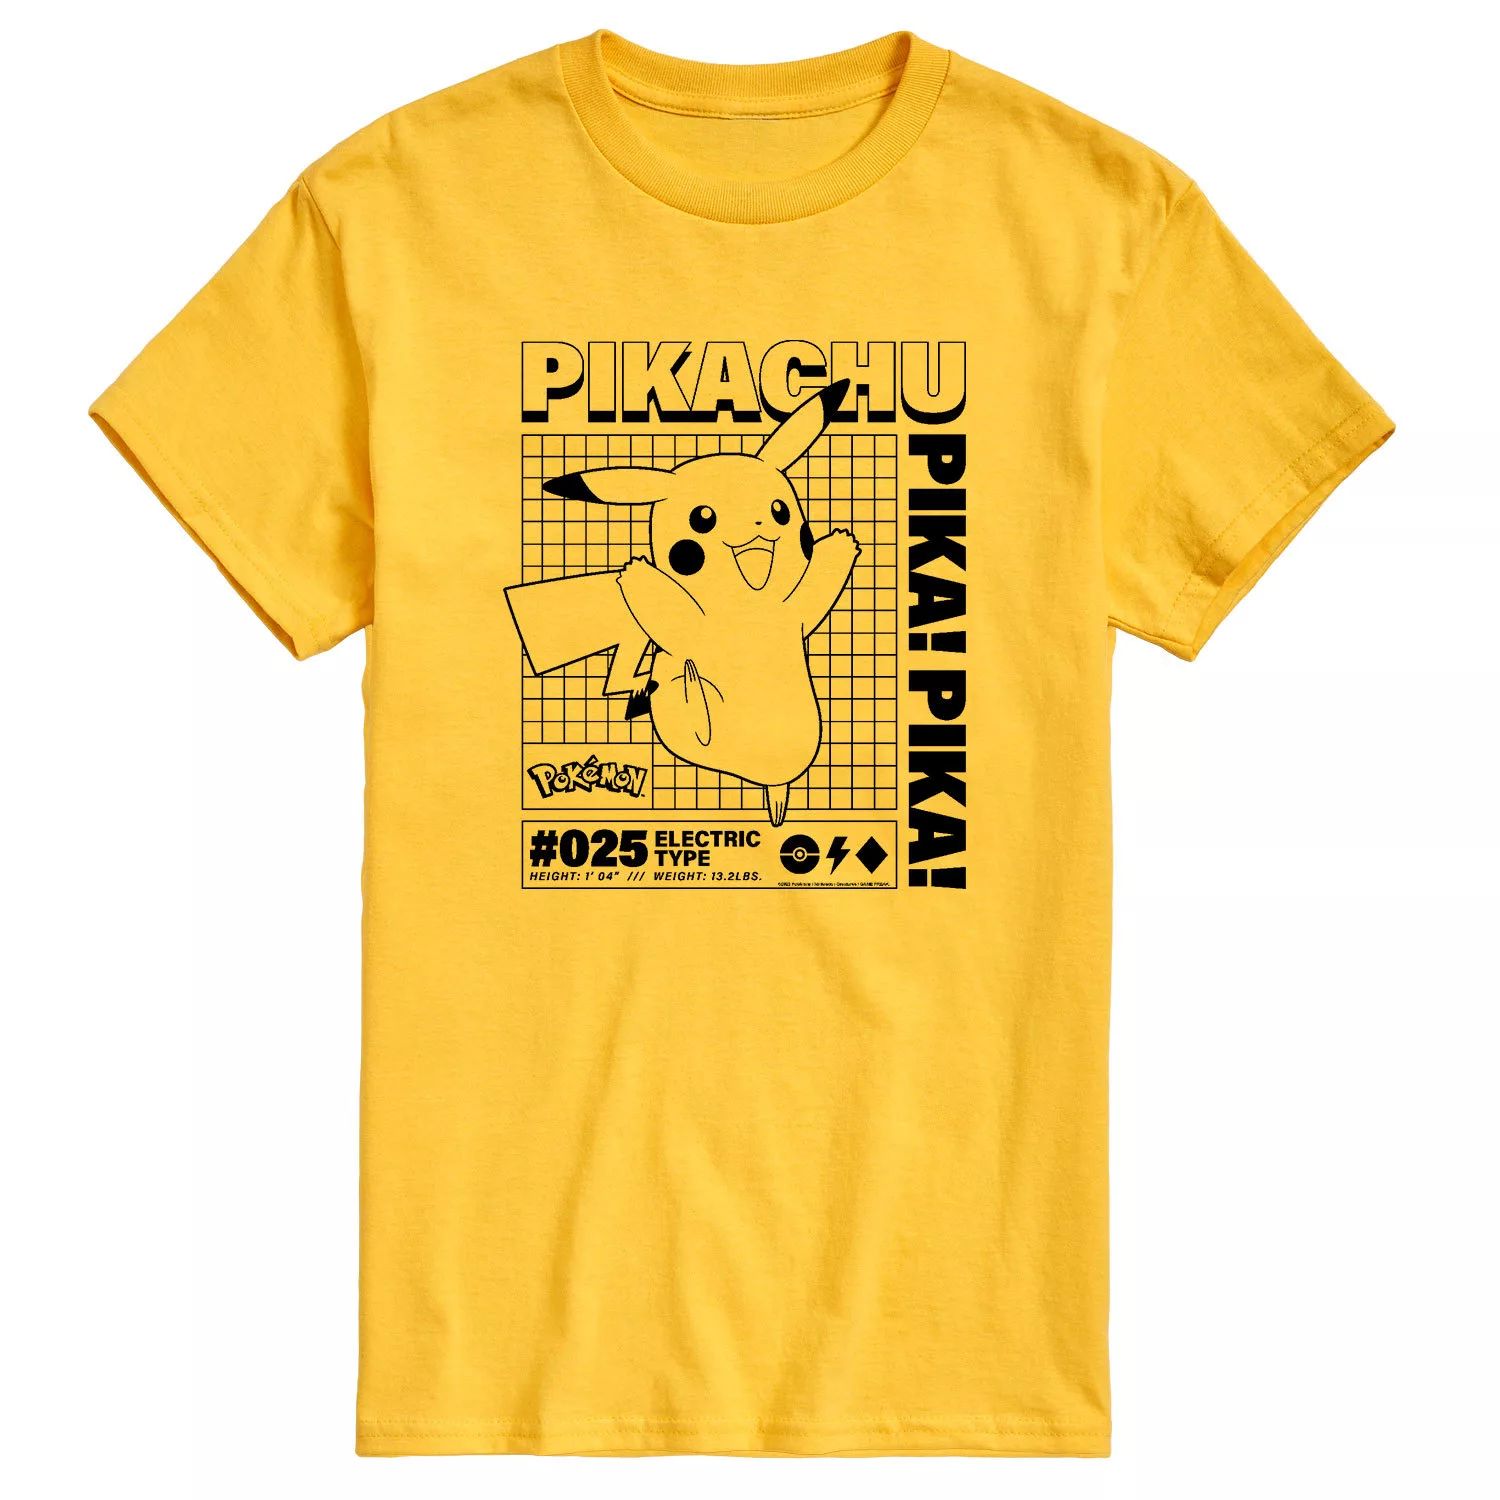 Мужская футболка с покемоном Пикачу Licensed Character пазлы детские с покемоном пикачу 300 500 1000 шт